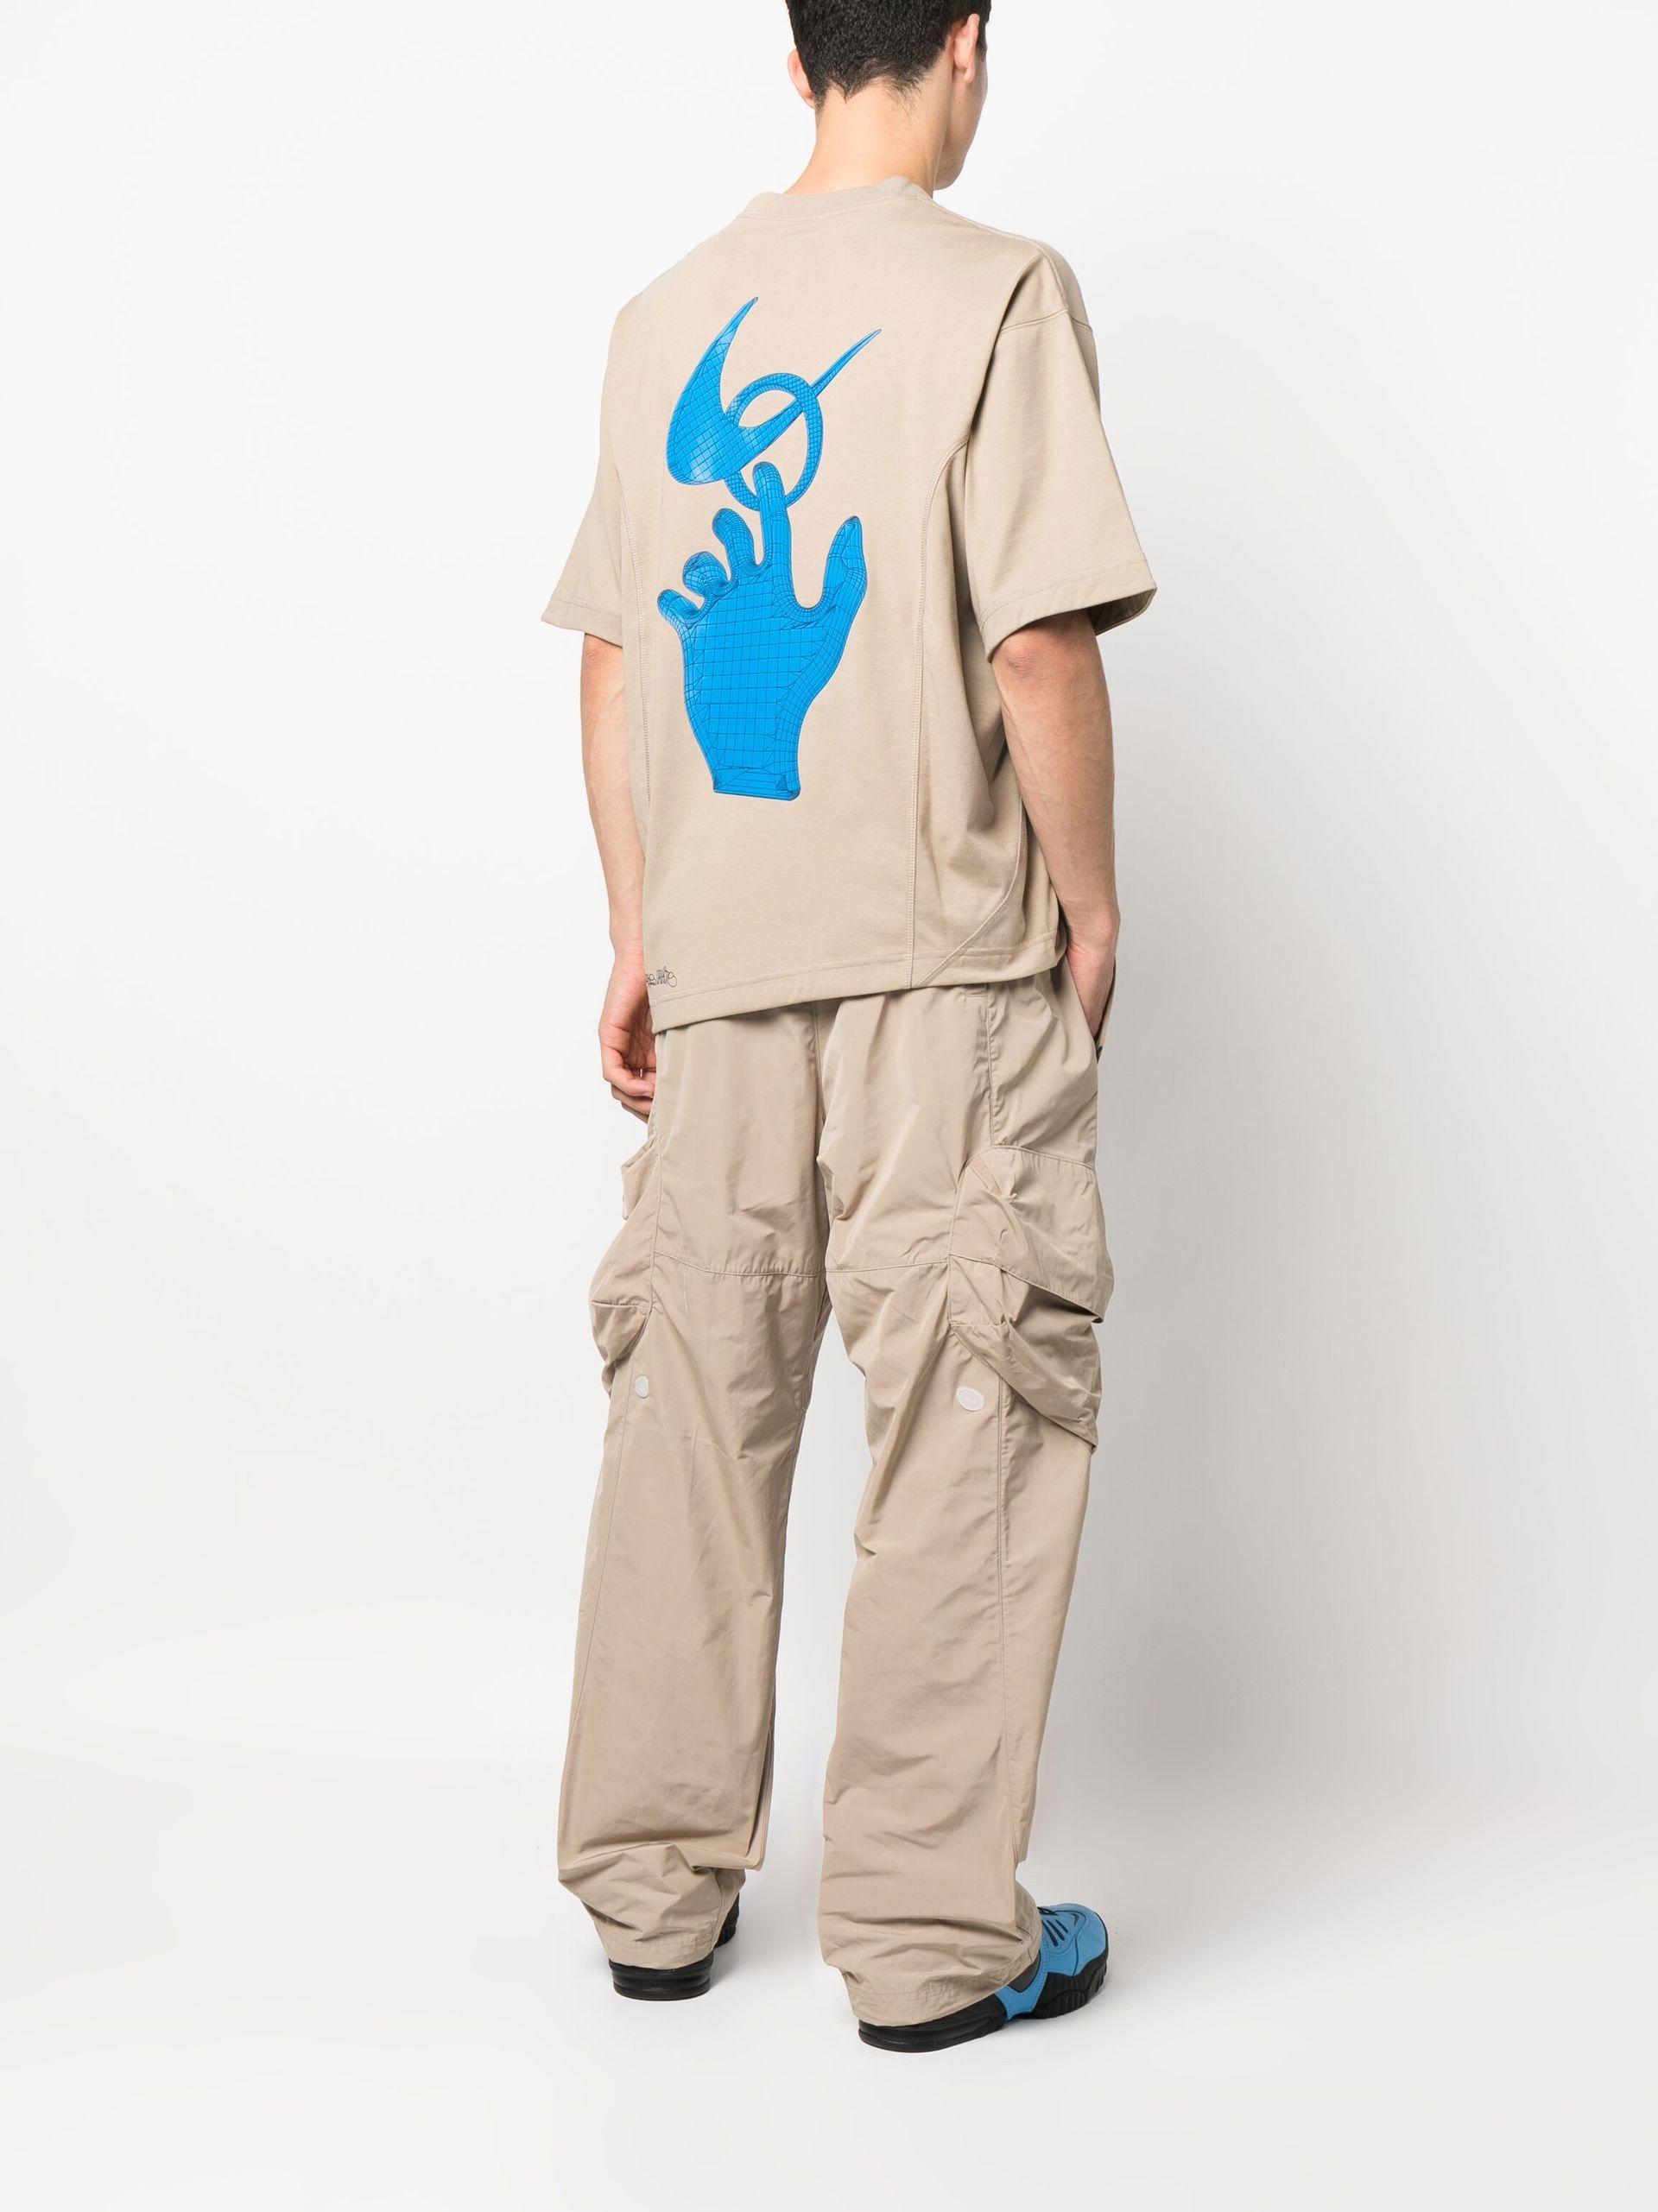 NIKE X OFF-WHITE Graffiti-print Detail T-shirt in Natural for Men | Lyst